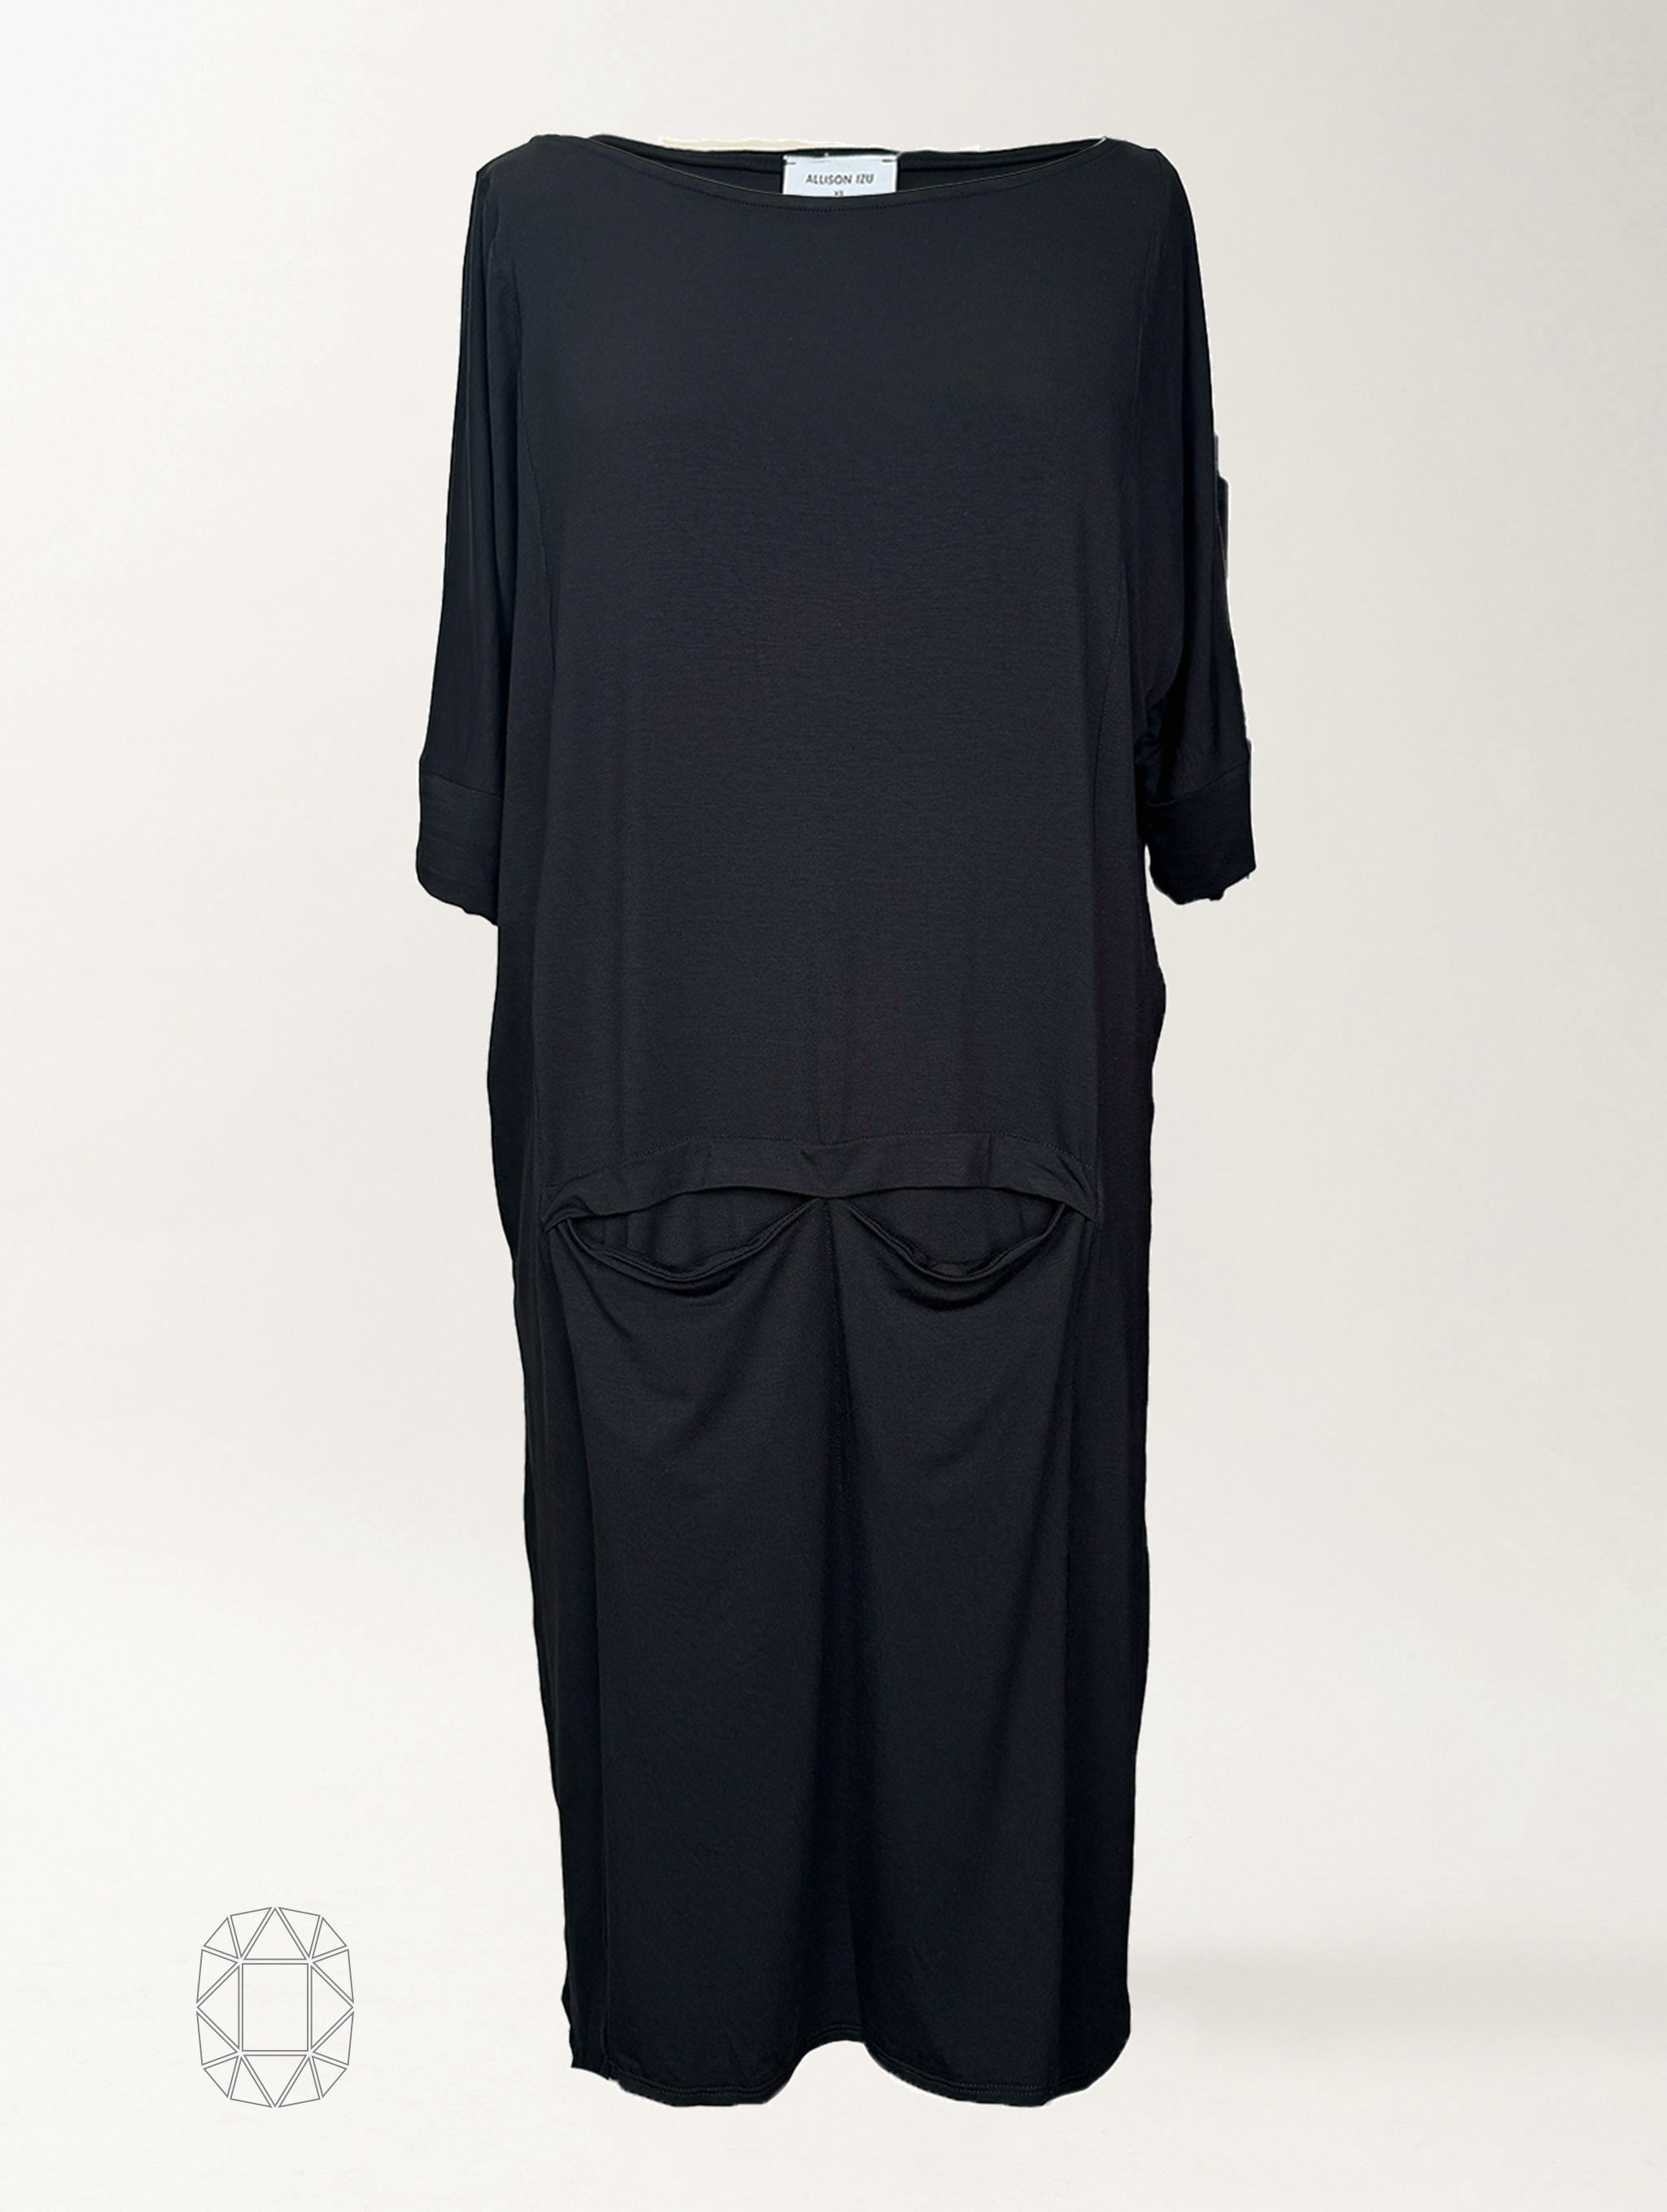 Danica Dress - Black Rayon Jersey